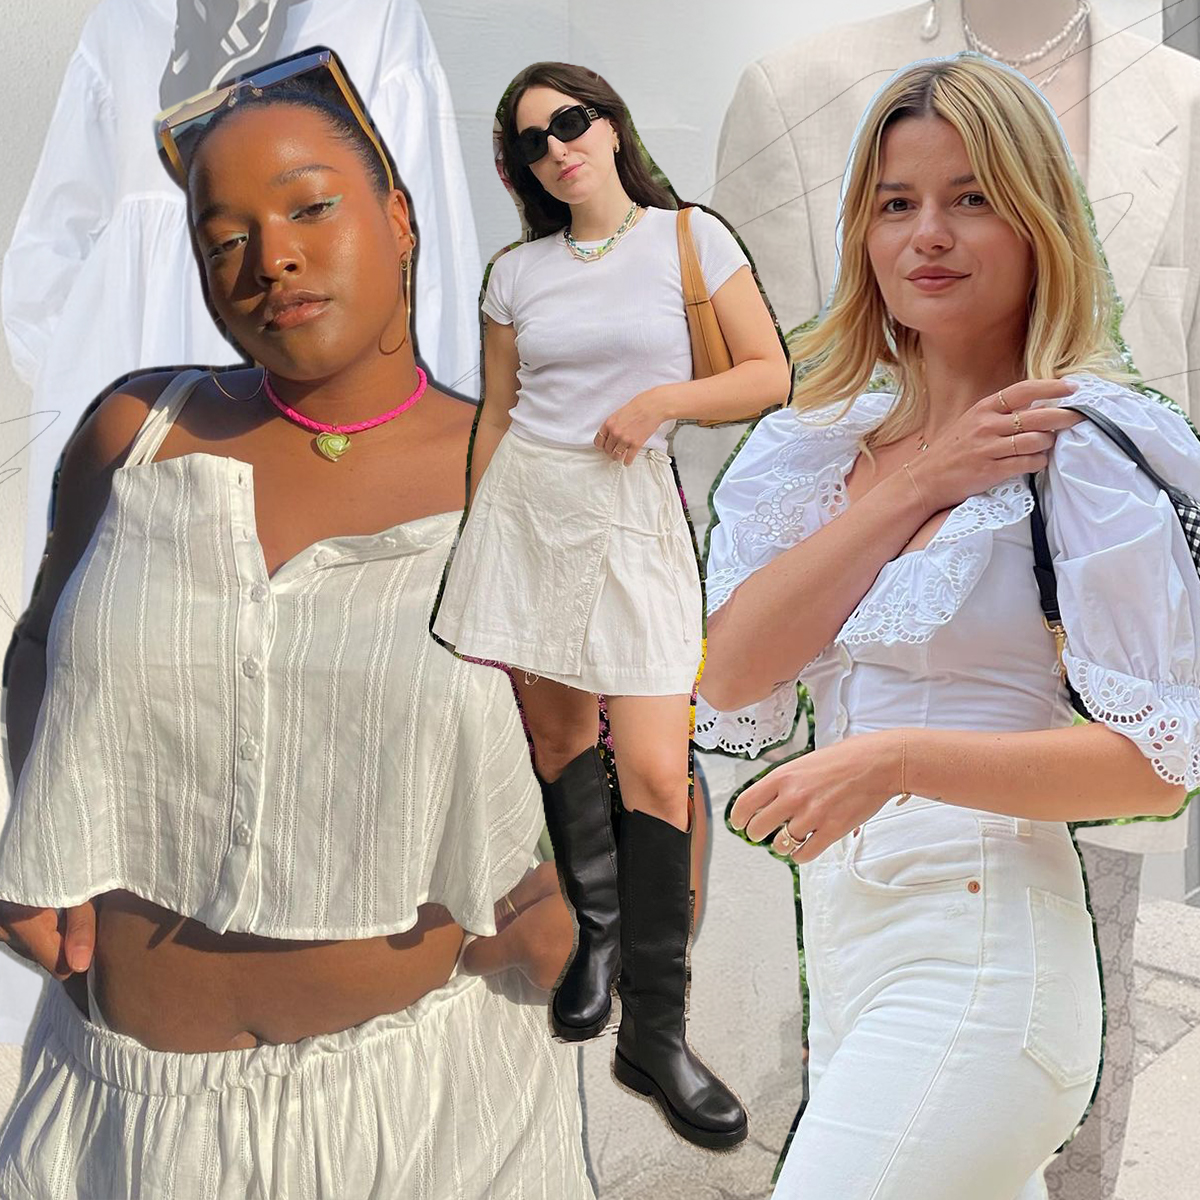 Crisp Summer Linen Outfit ⋆ chic everywhere